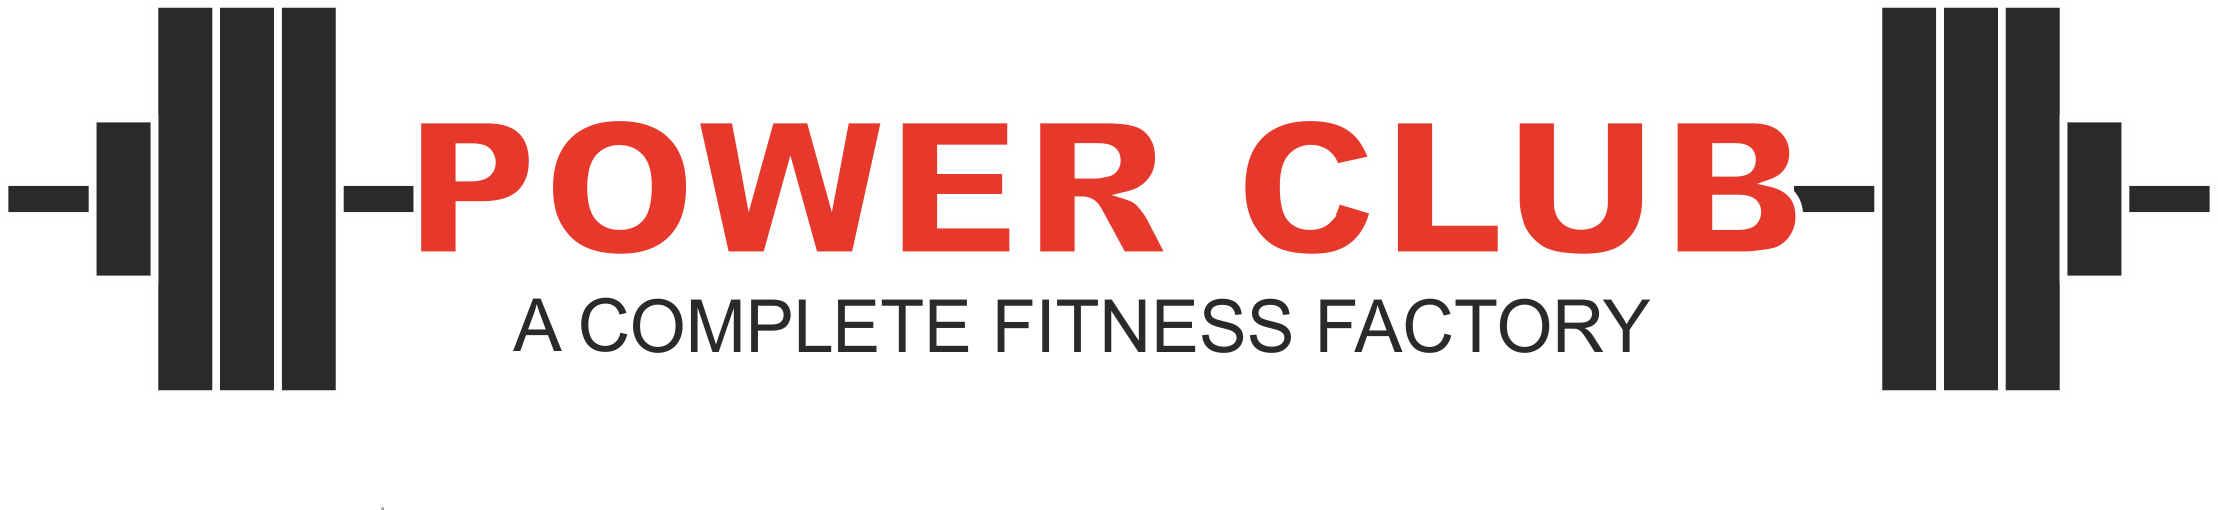 POWER CLUB - Logo